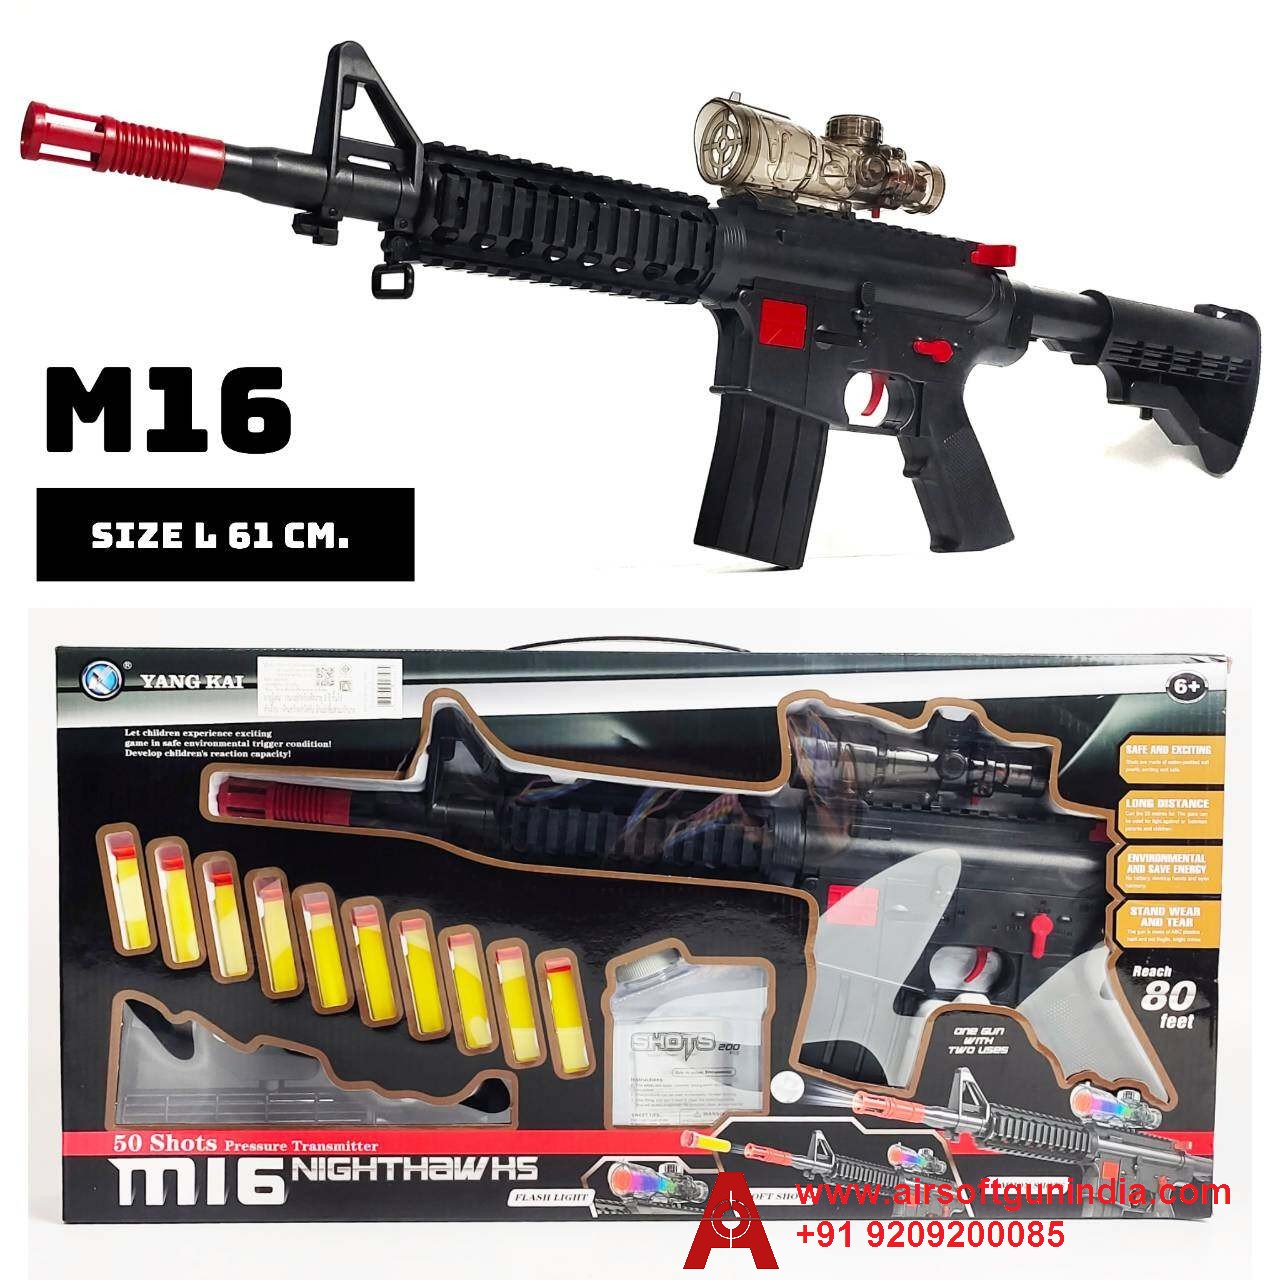 M16 Dart And Gel Blaster Airsoft Rifle By Airsoft Gun India